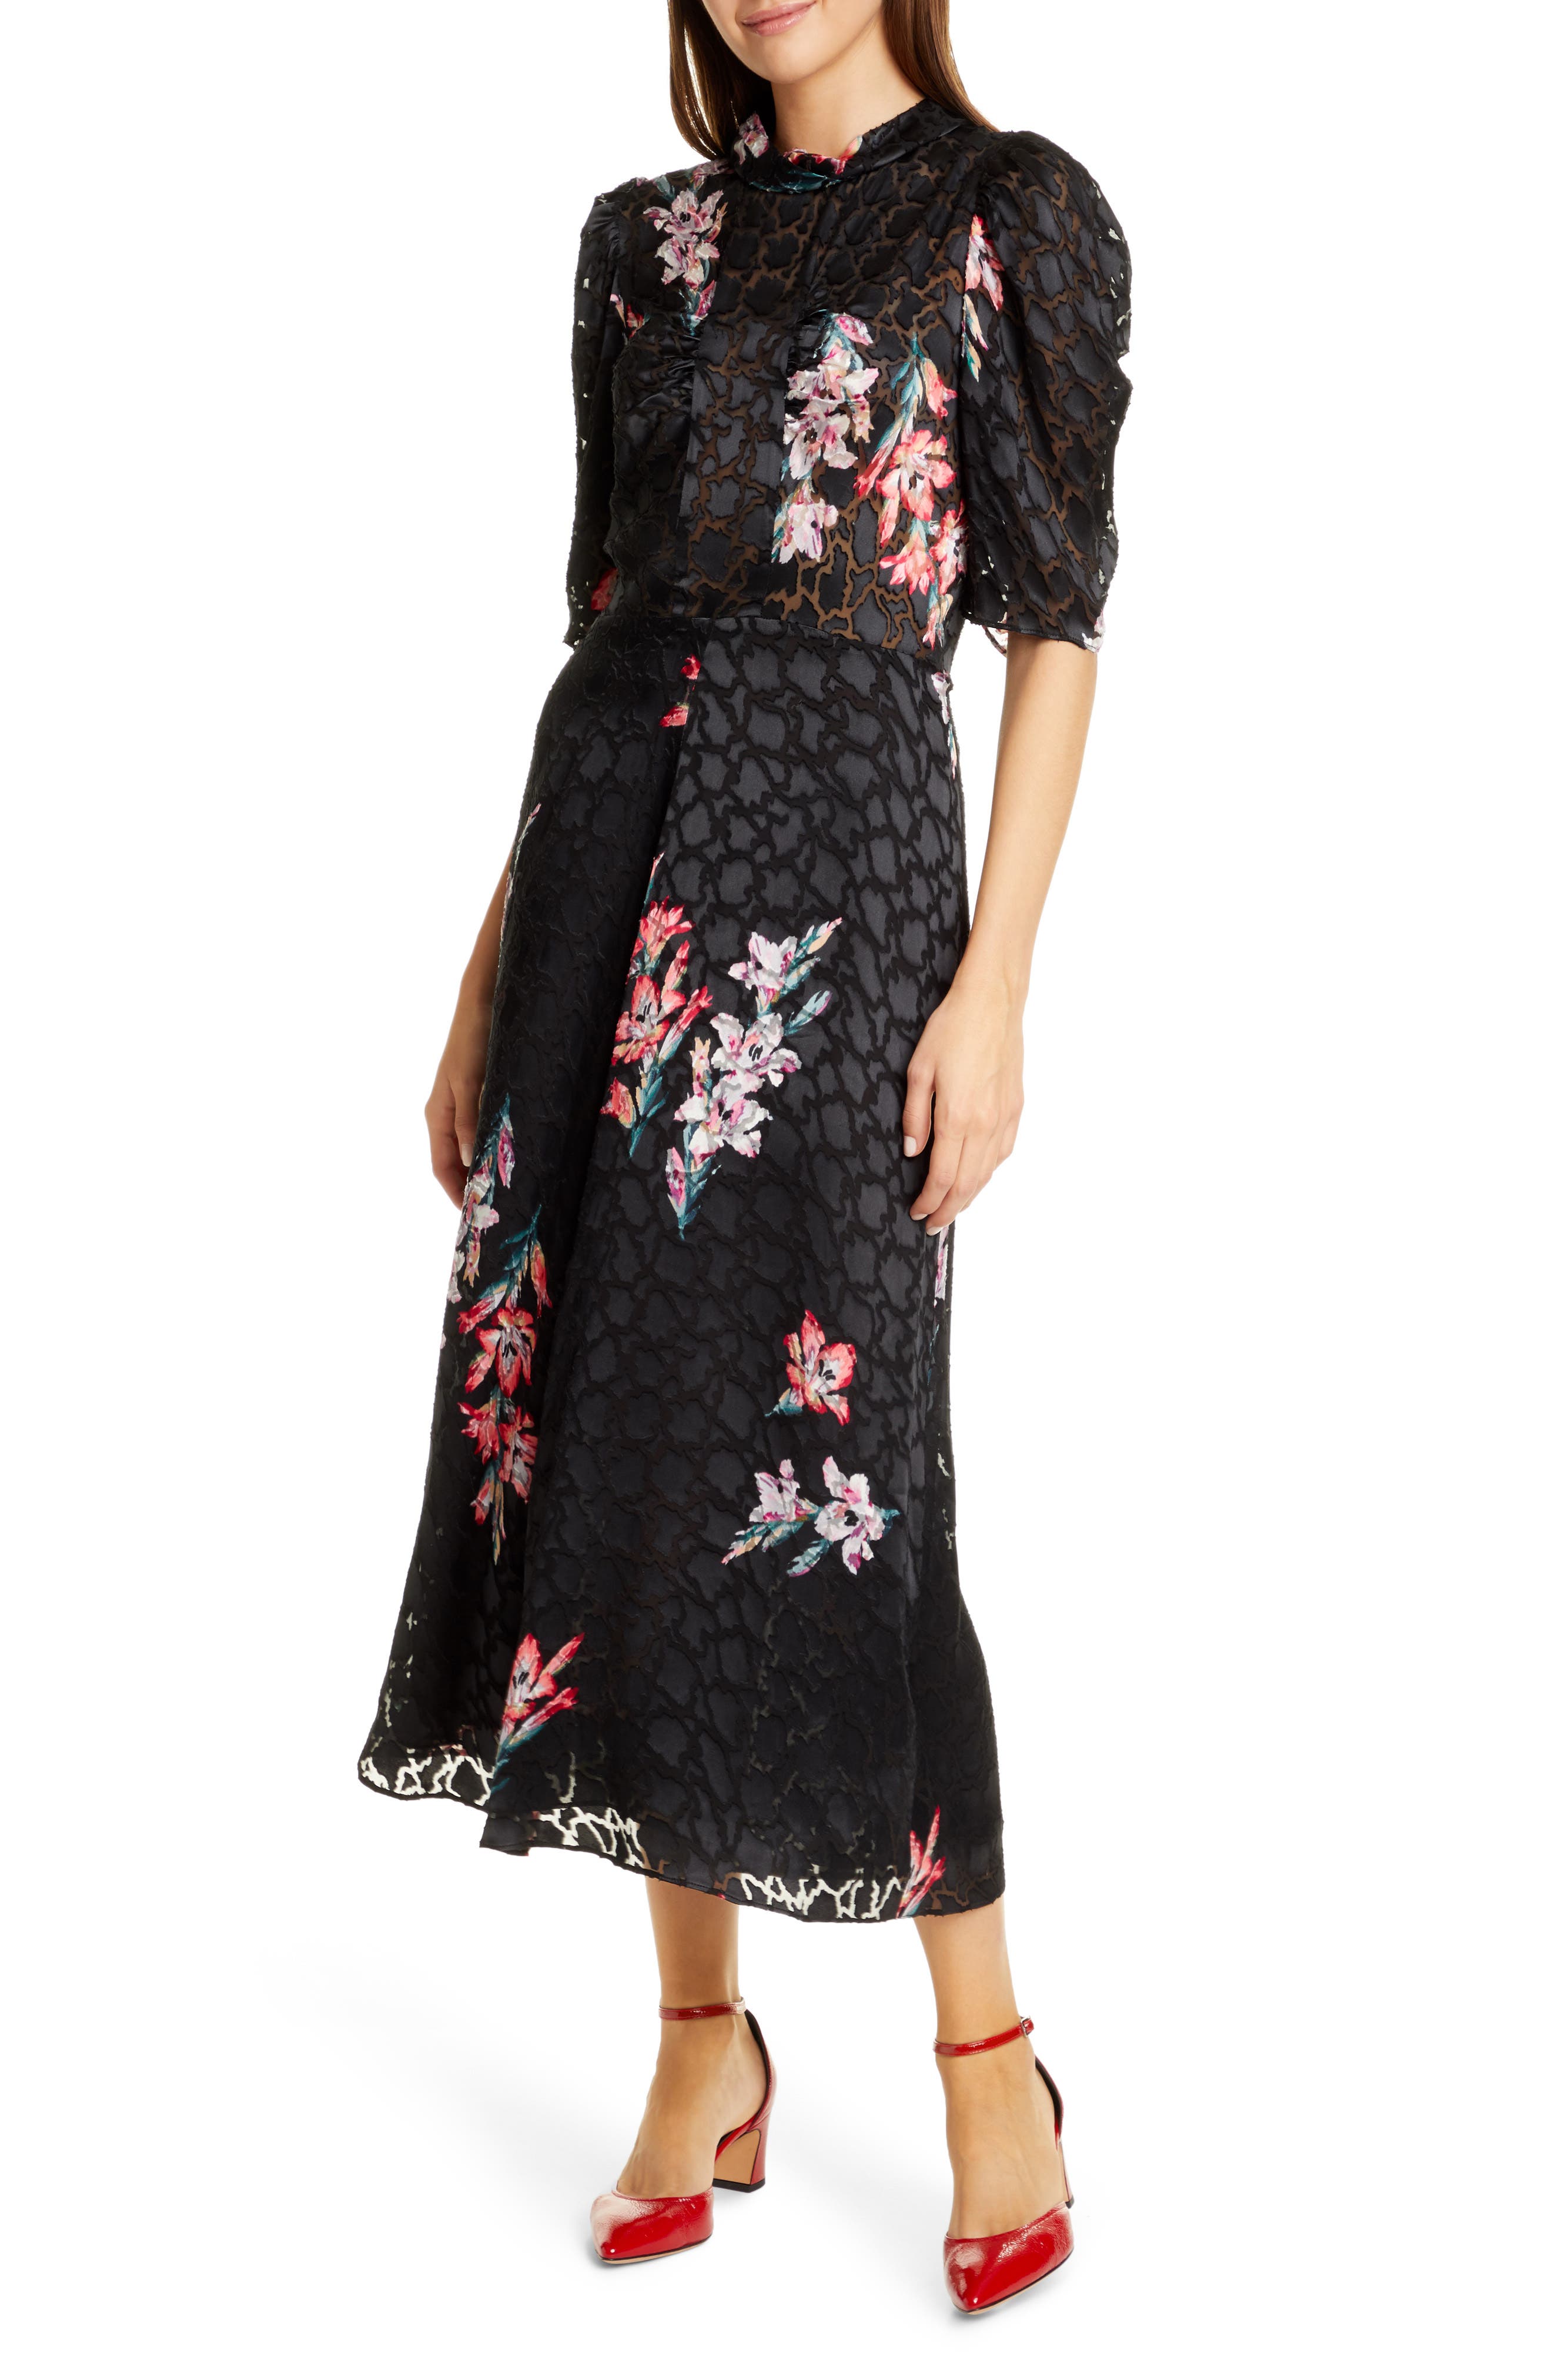 rebecca taylor black floral dress